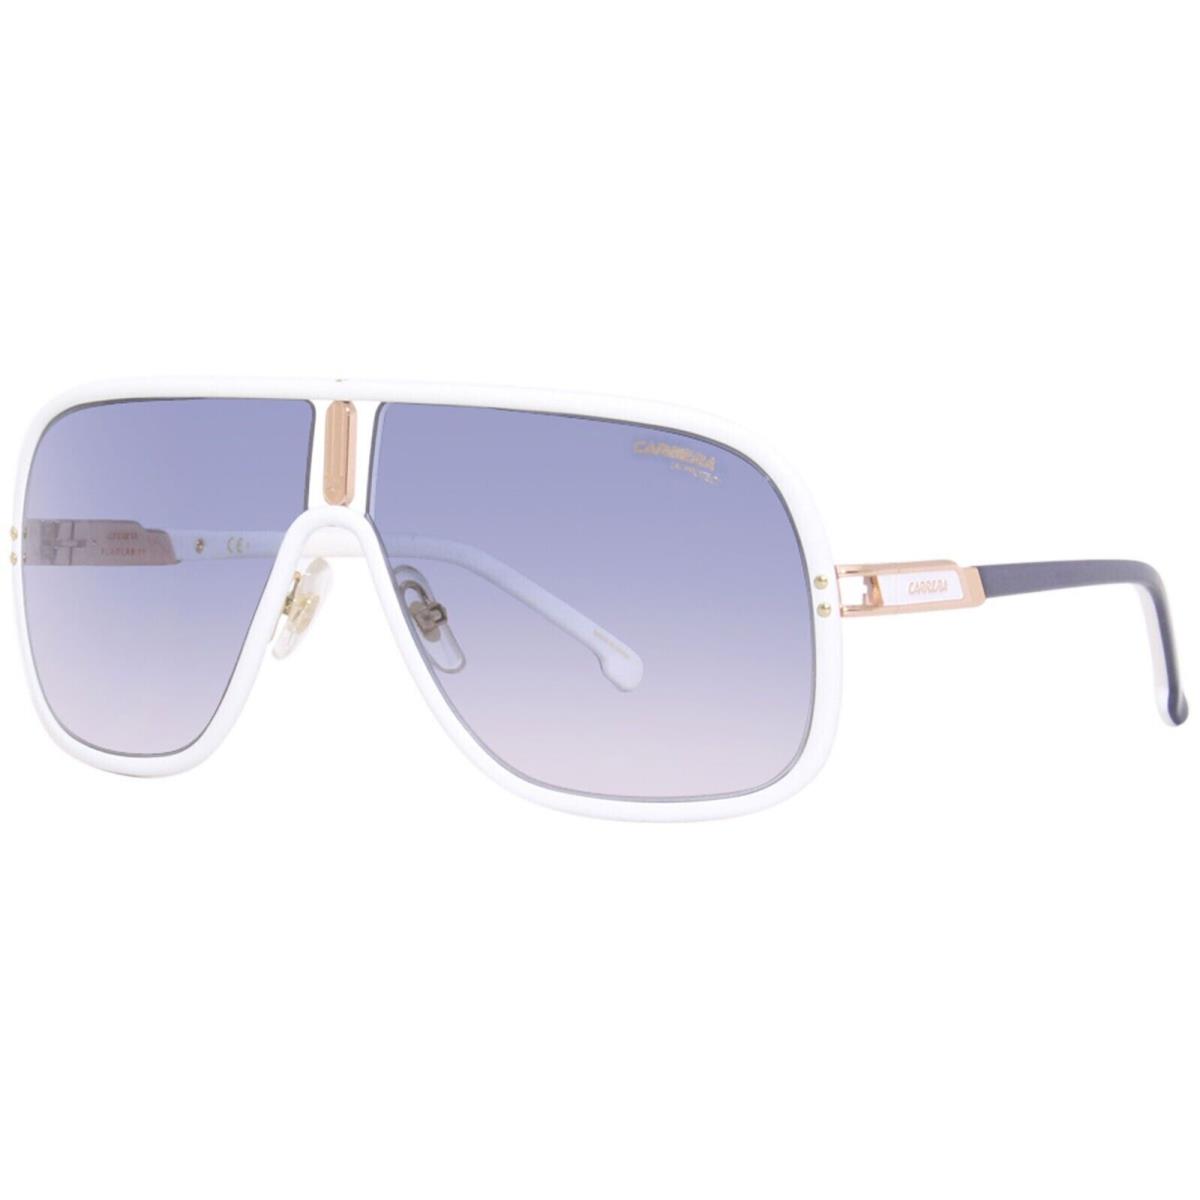 Carrera Flaglab/11 VK608 Special Edition Sunglasses Men`s White/gold/blue 64mm - Frame: Gold, Lens: Blue